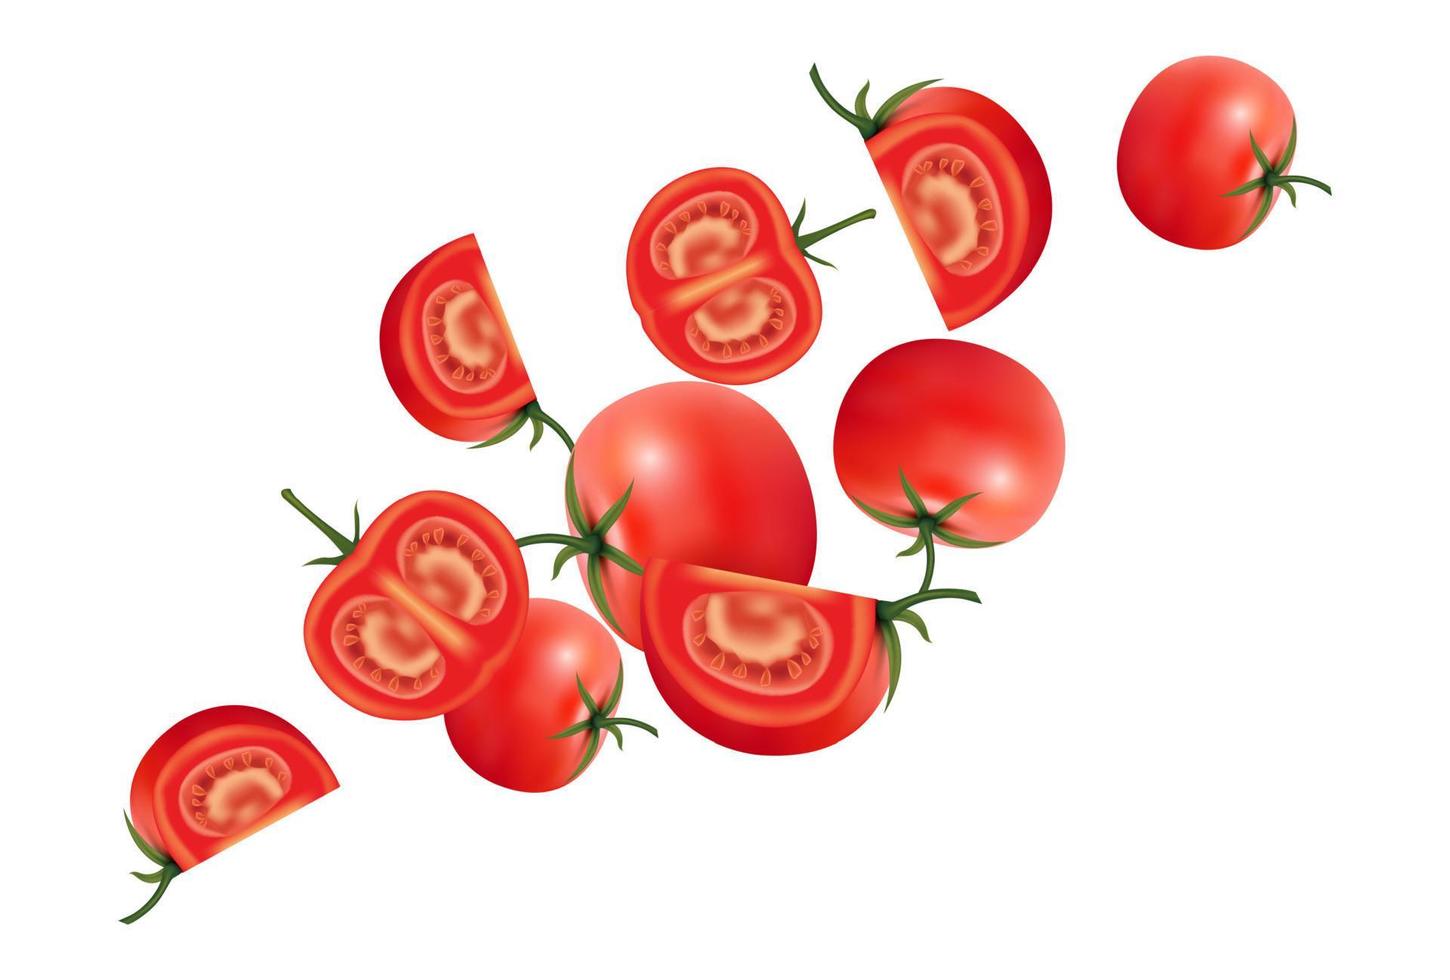 färsk tomat som flyger av bitar i mitten på vit bakgrund. realistisk 3d vektorillustration. vektor